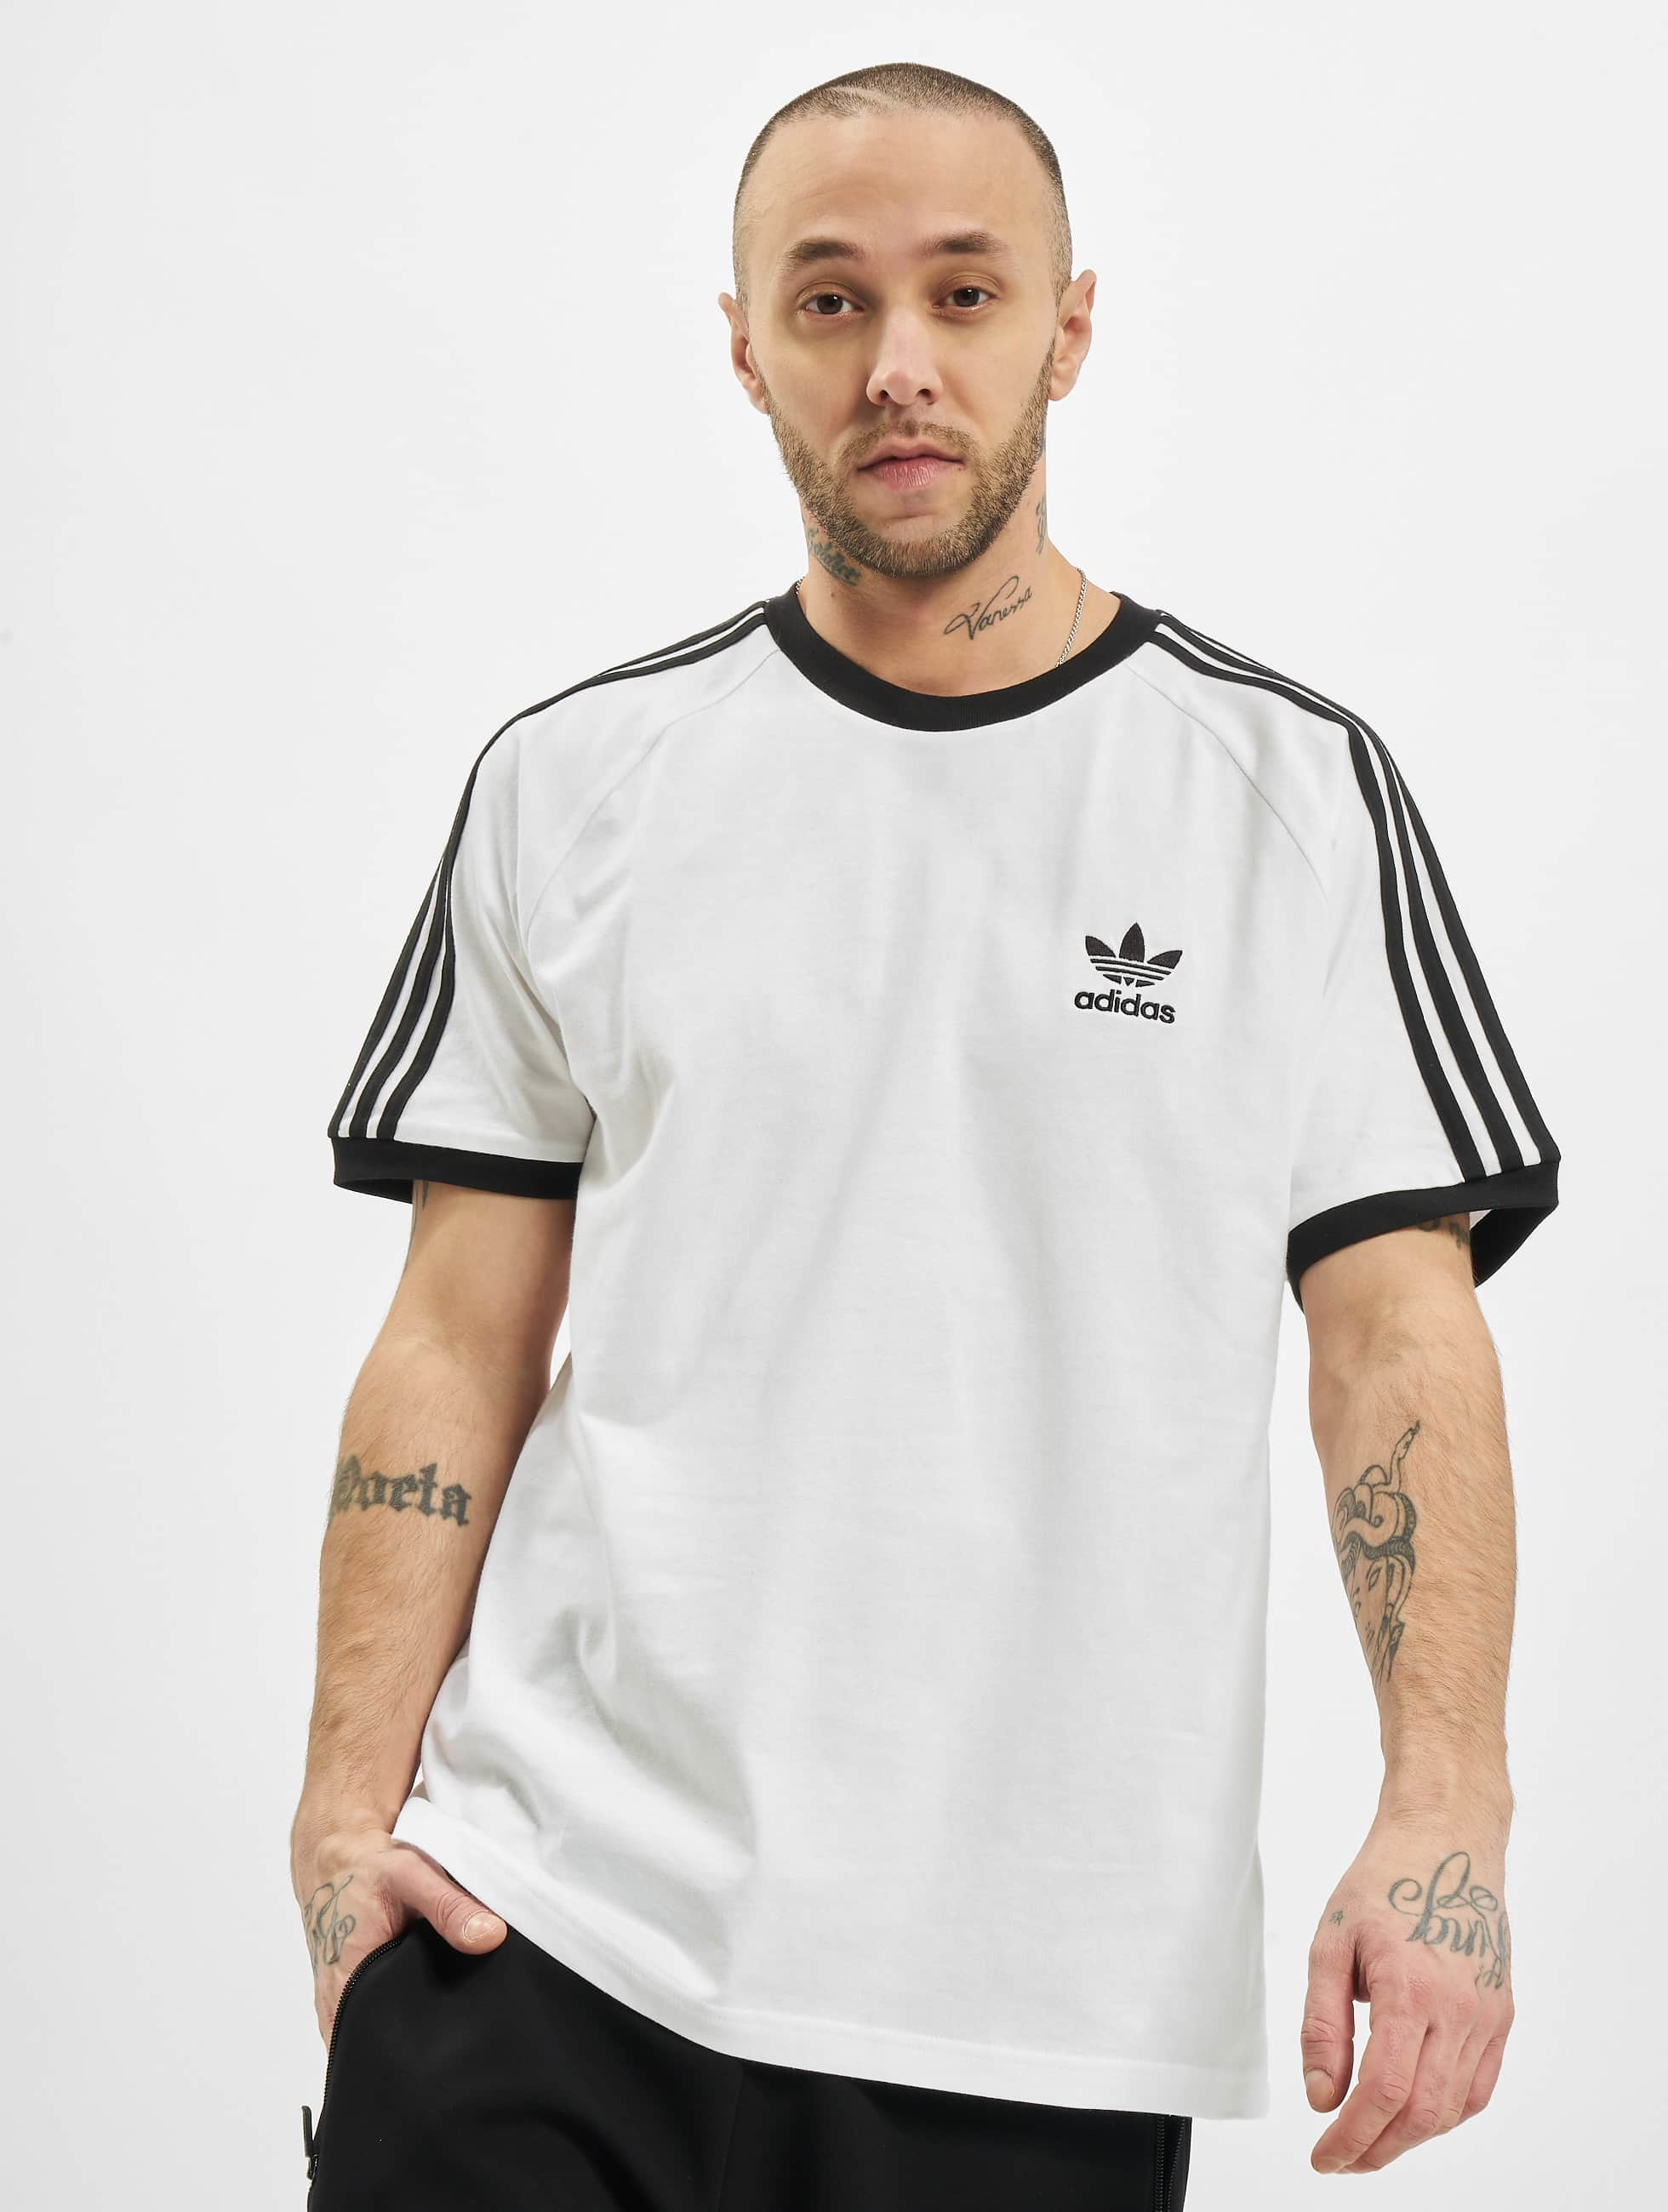 slogan module hoek adidas Originals bovenstuk / t-shirt 3-Stripes in wit 801790